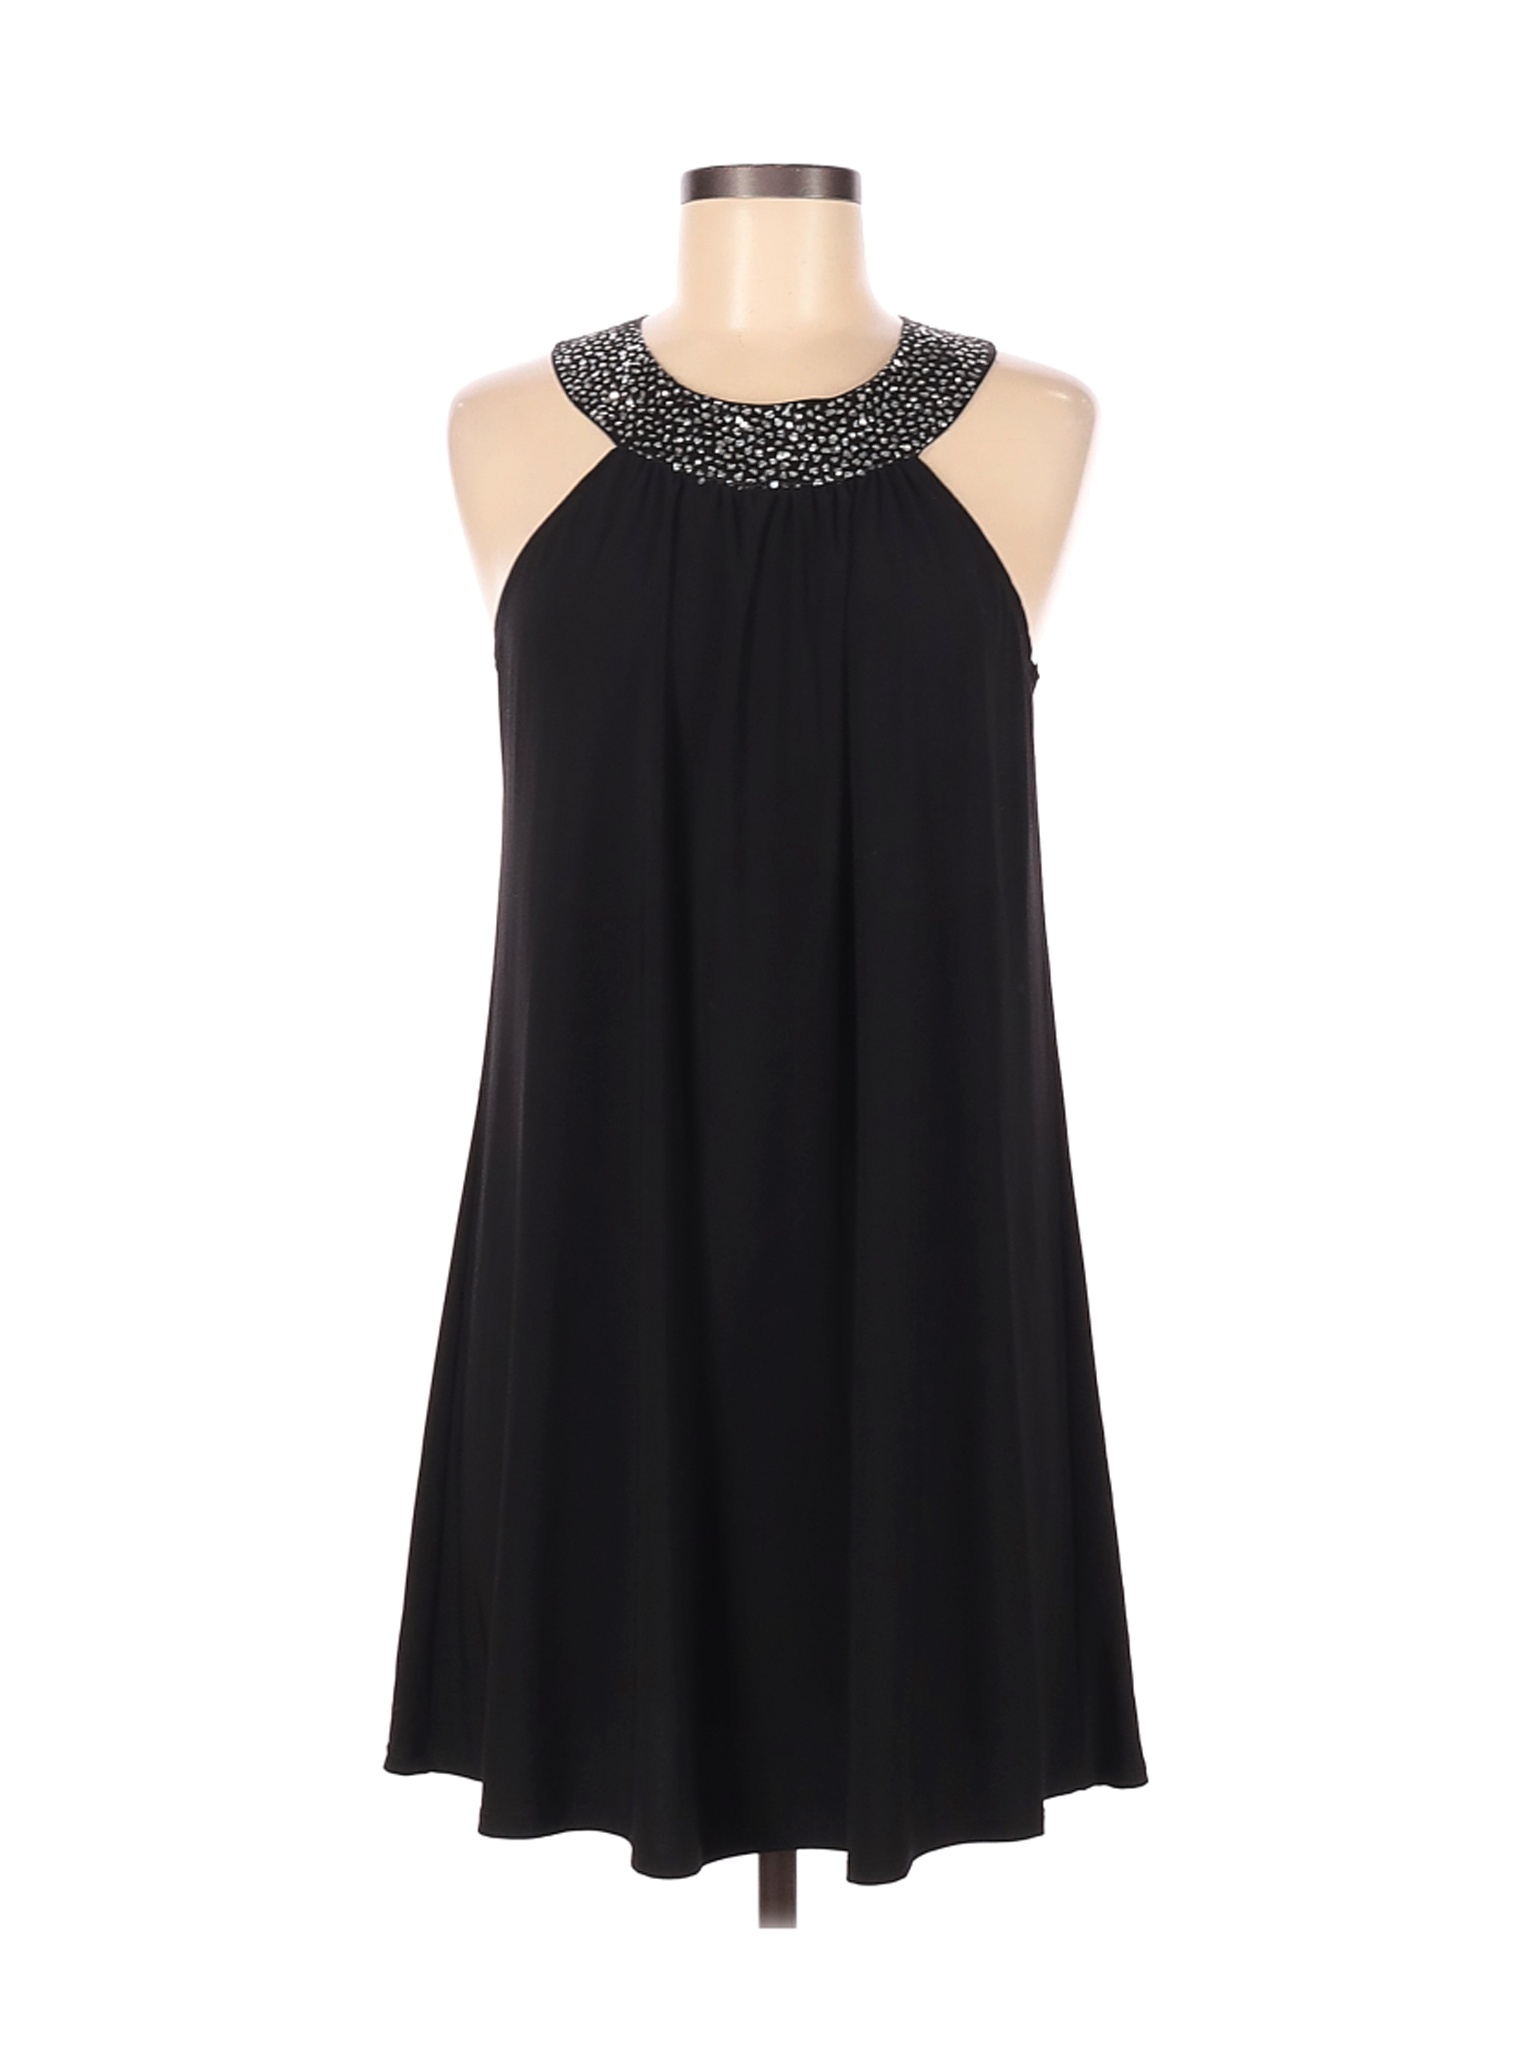 City Triangles Women Black Cocktail Dress M | eBay